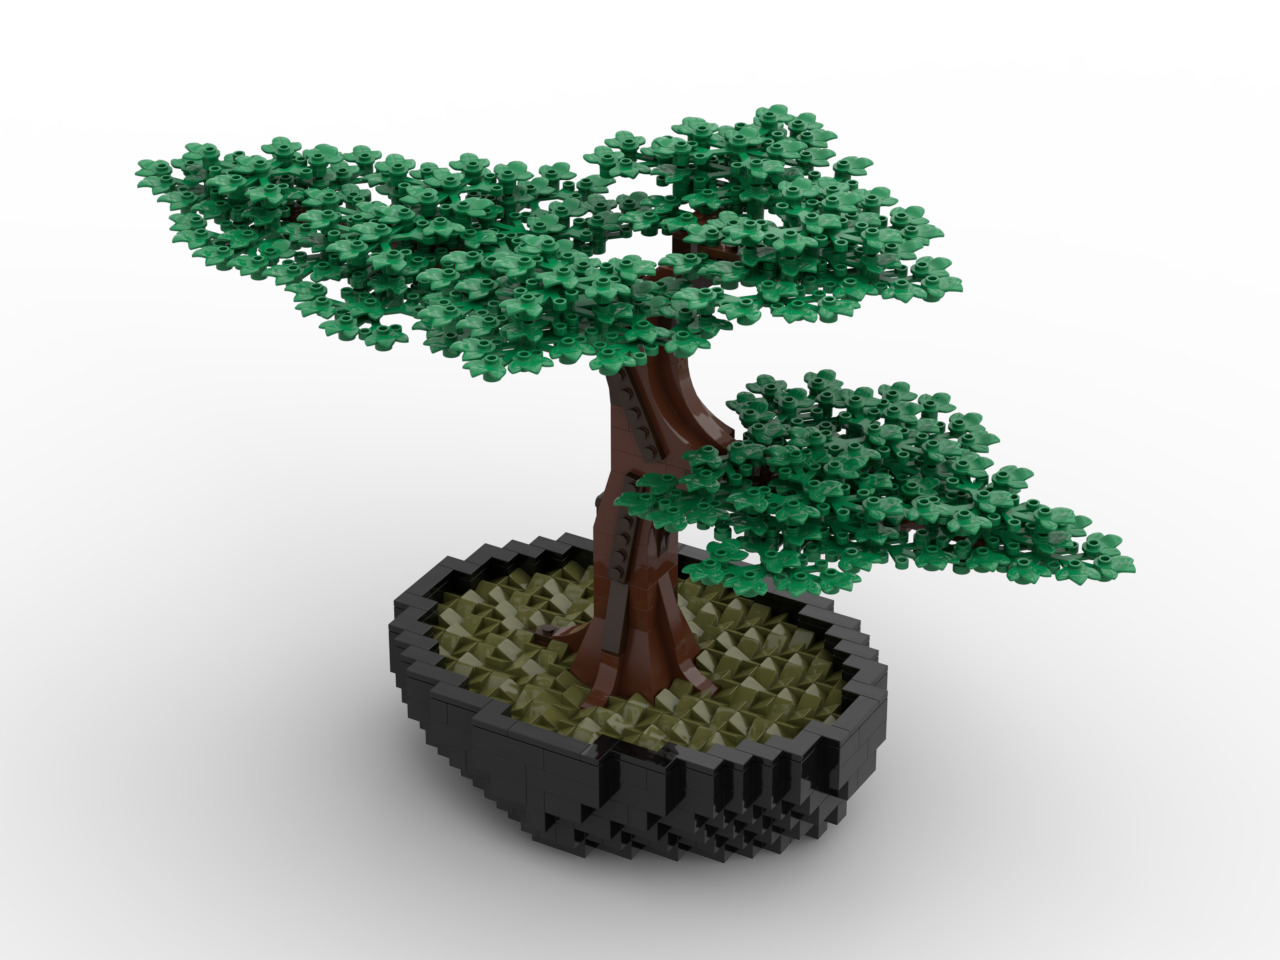 LEGO MOC Bonsai Tree x2 by JamesR